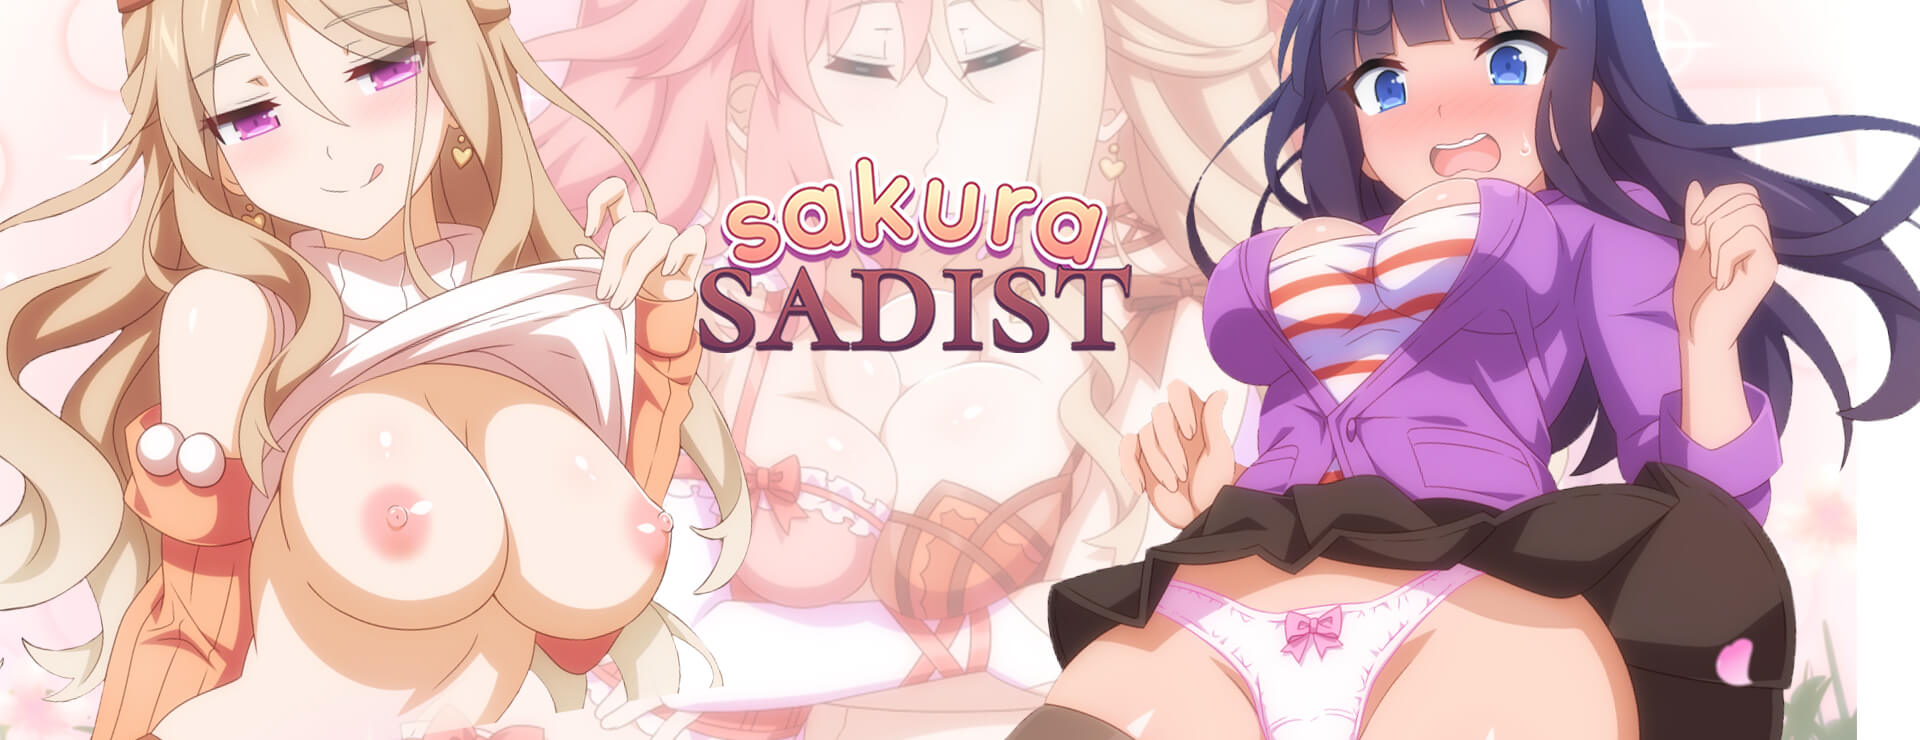 Sakura Sadist - Novela Visual Juego